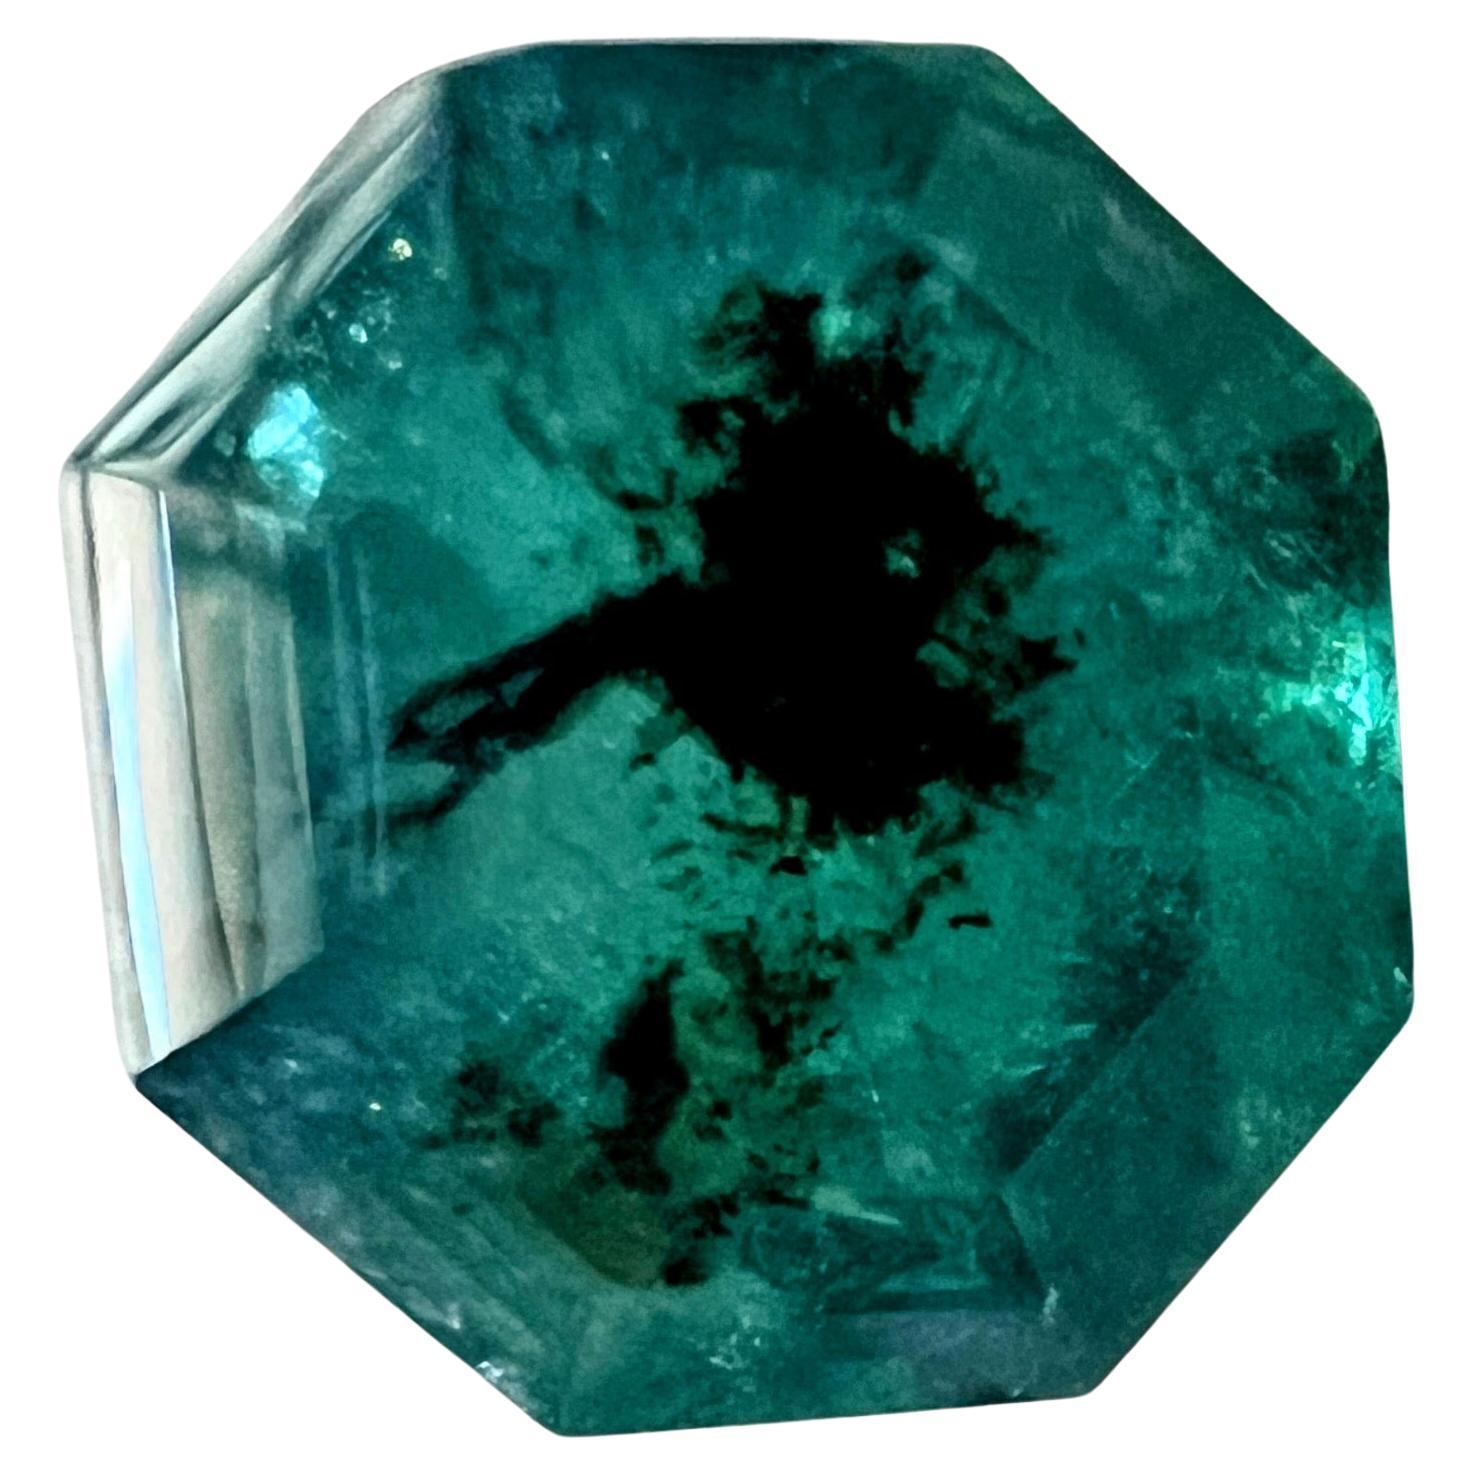 8.85ct Asscher Cut No-Oil Natural Untreated Emerald Gemstone For Sale